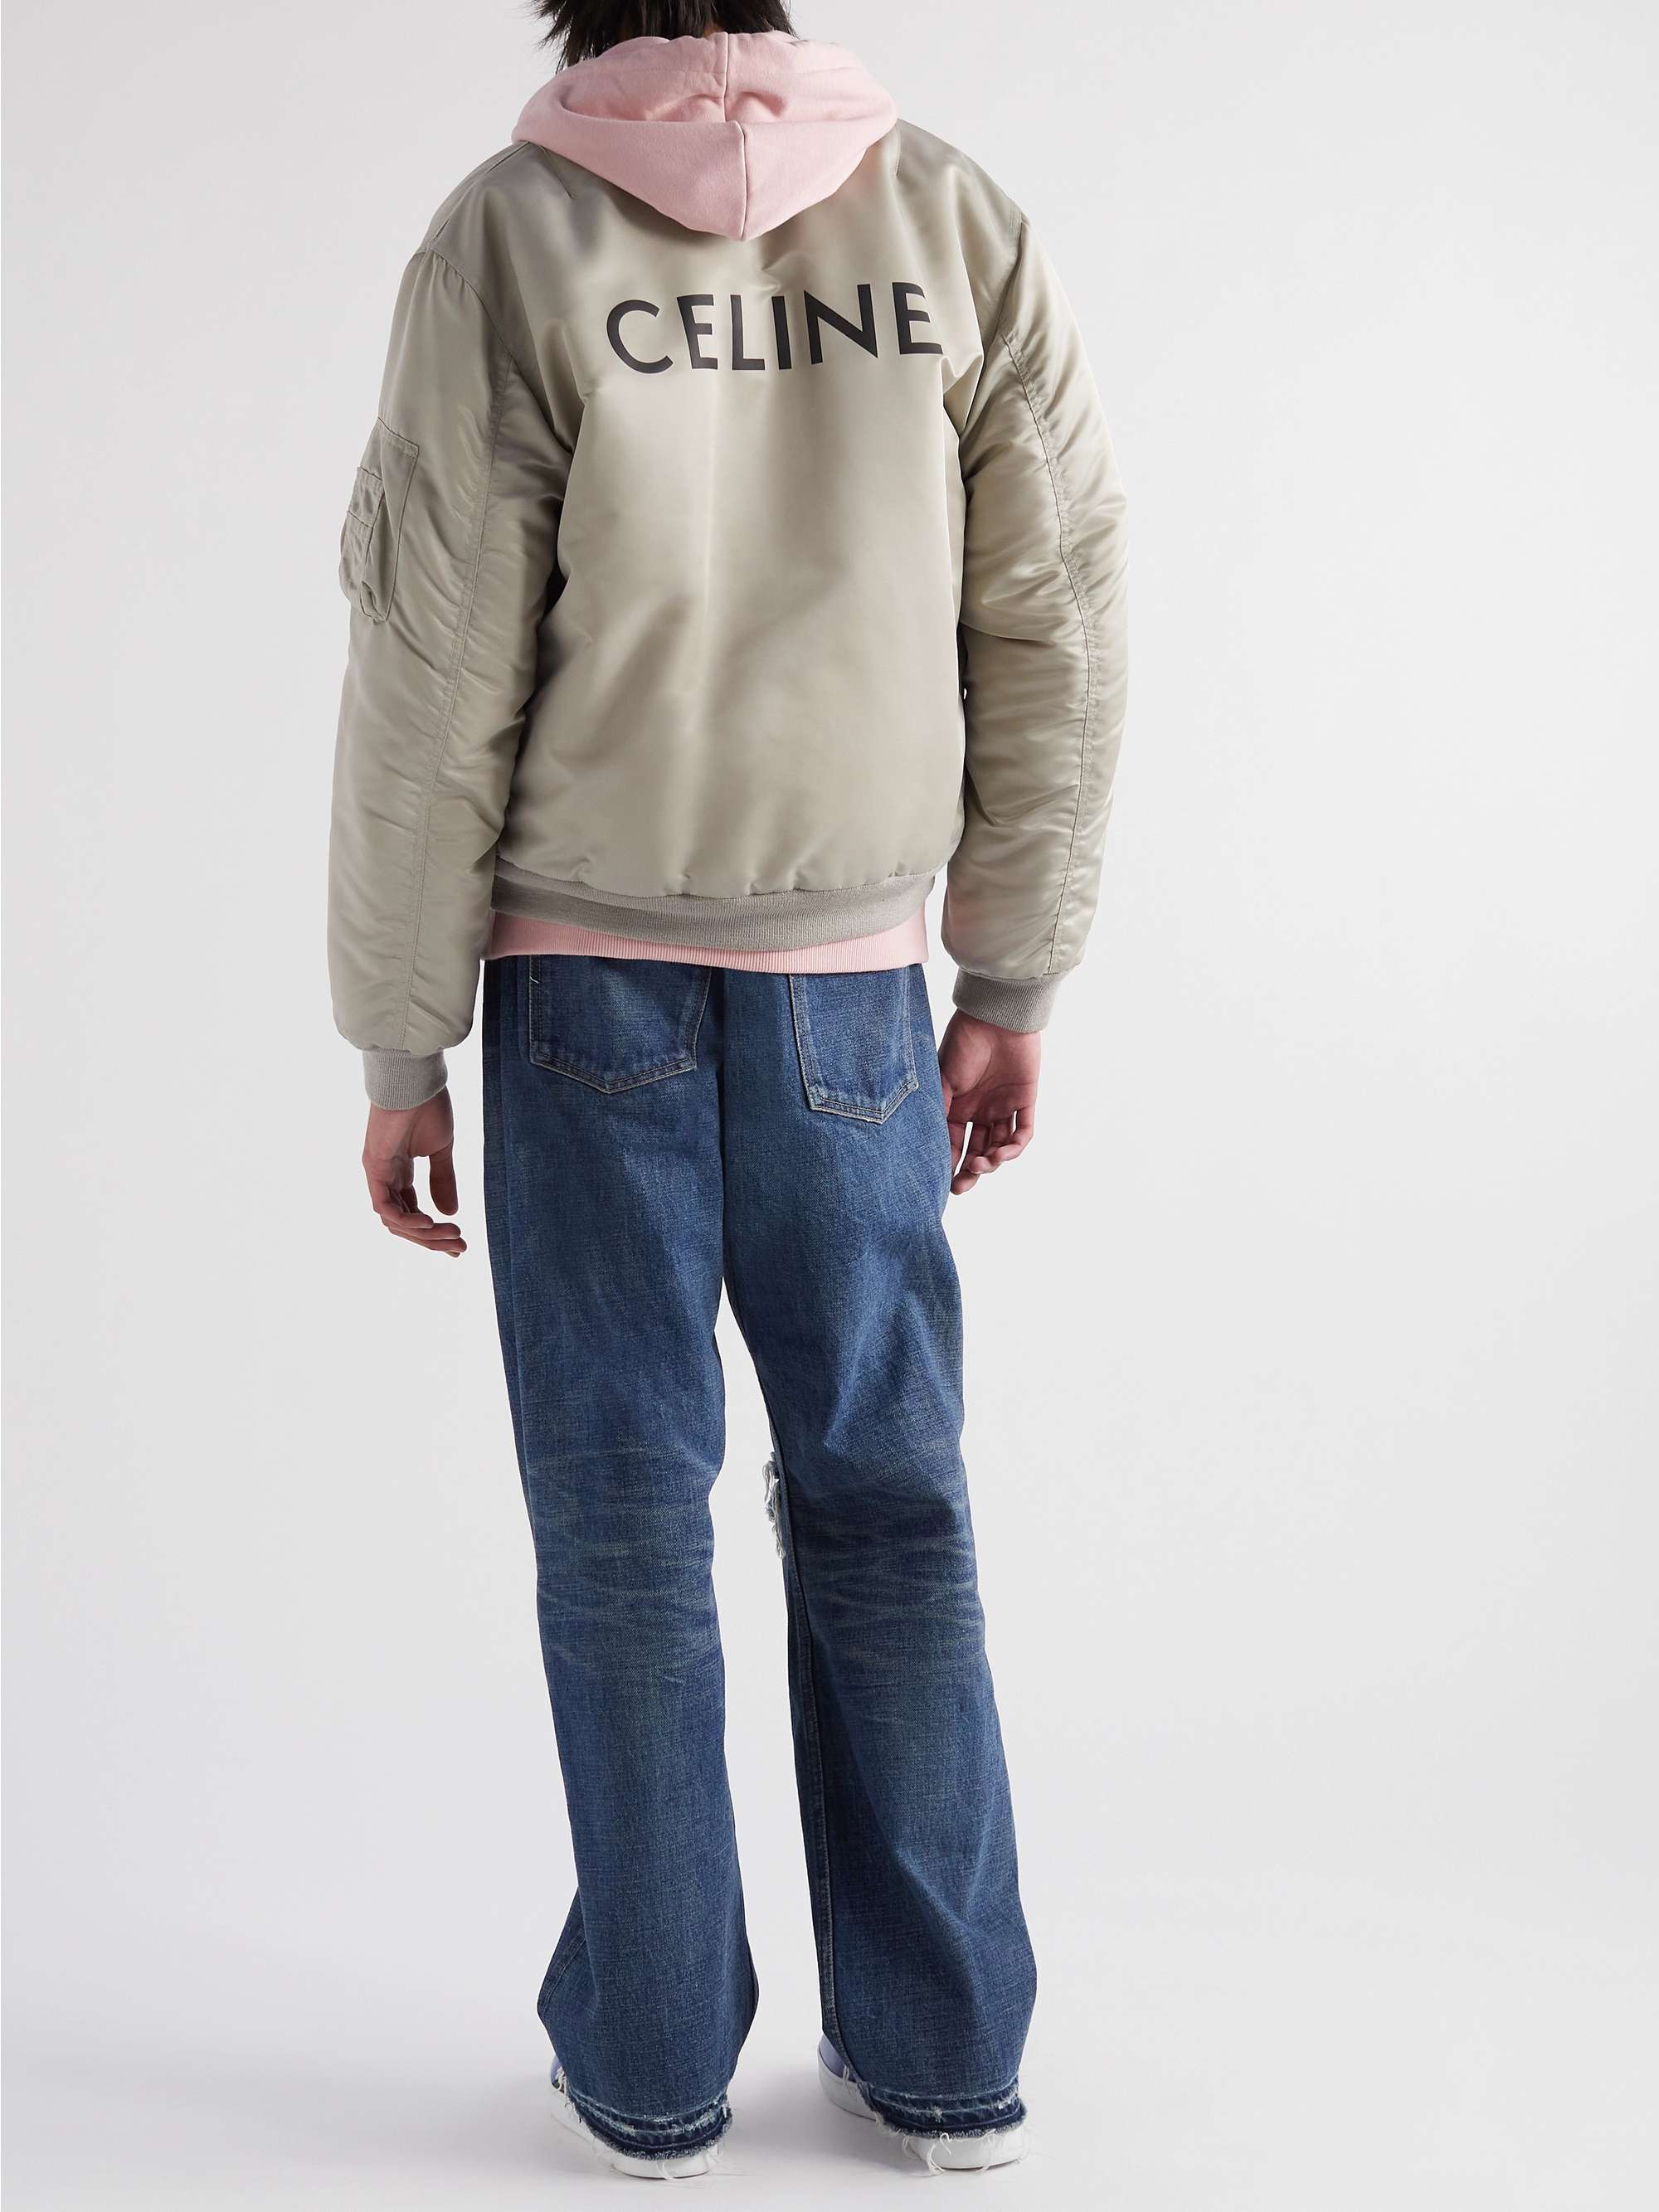 CELINE HOMME Logo-Print Chain-Embellished Nylon Bomber Jacket